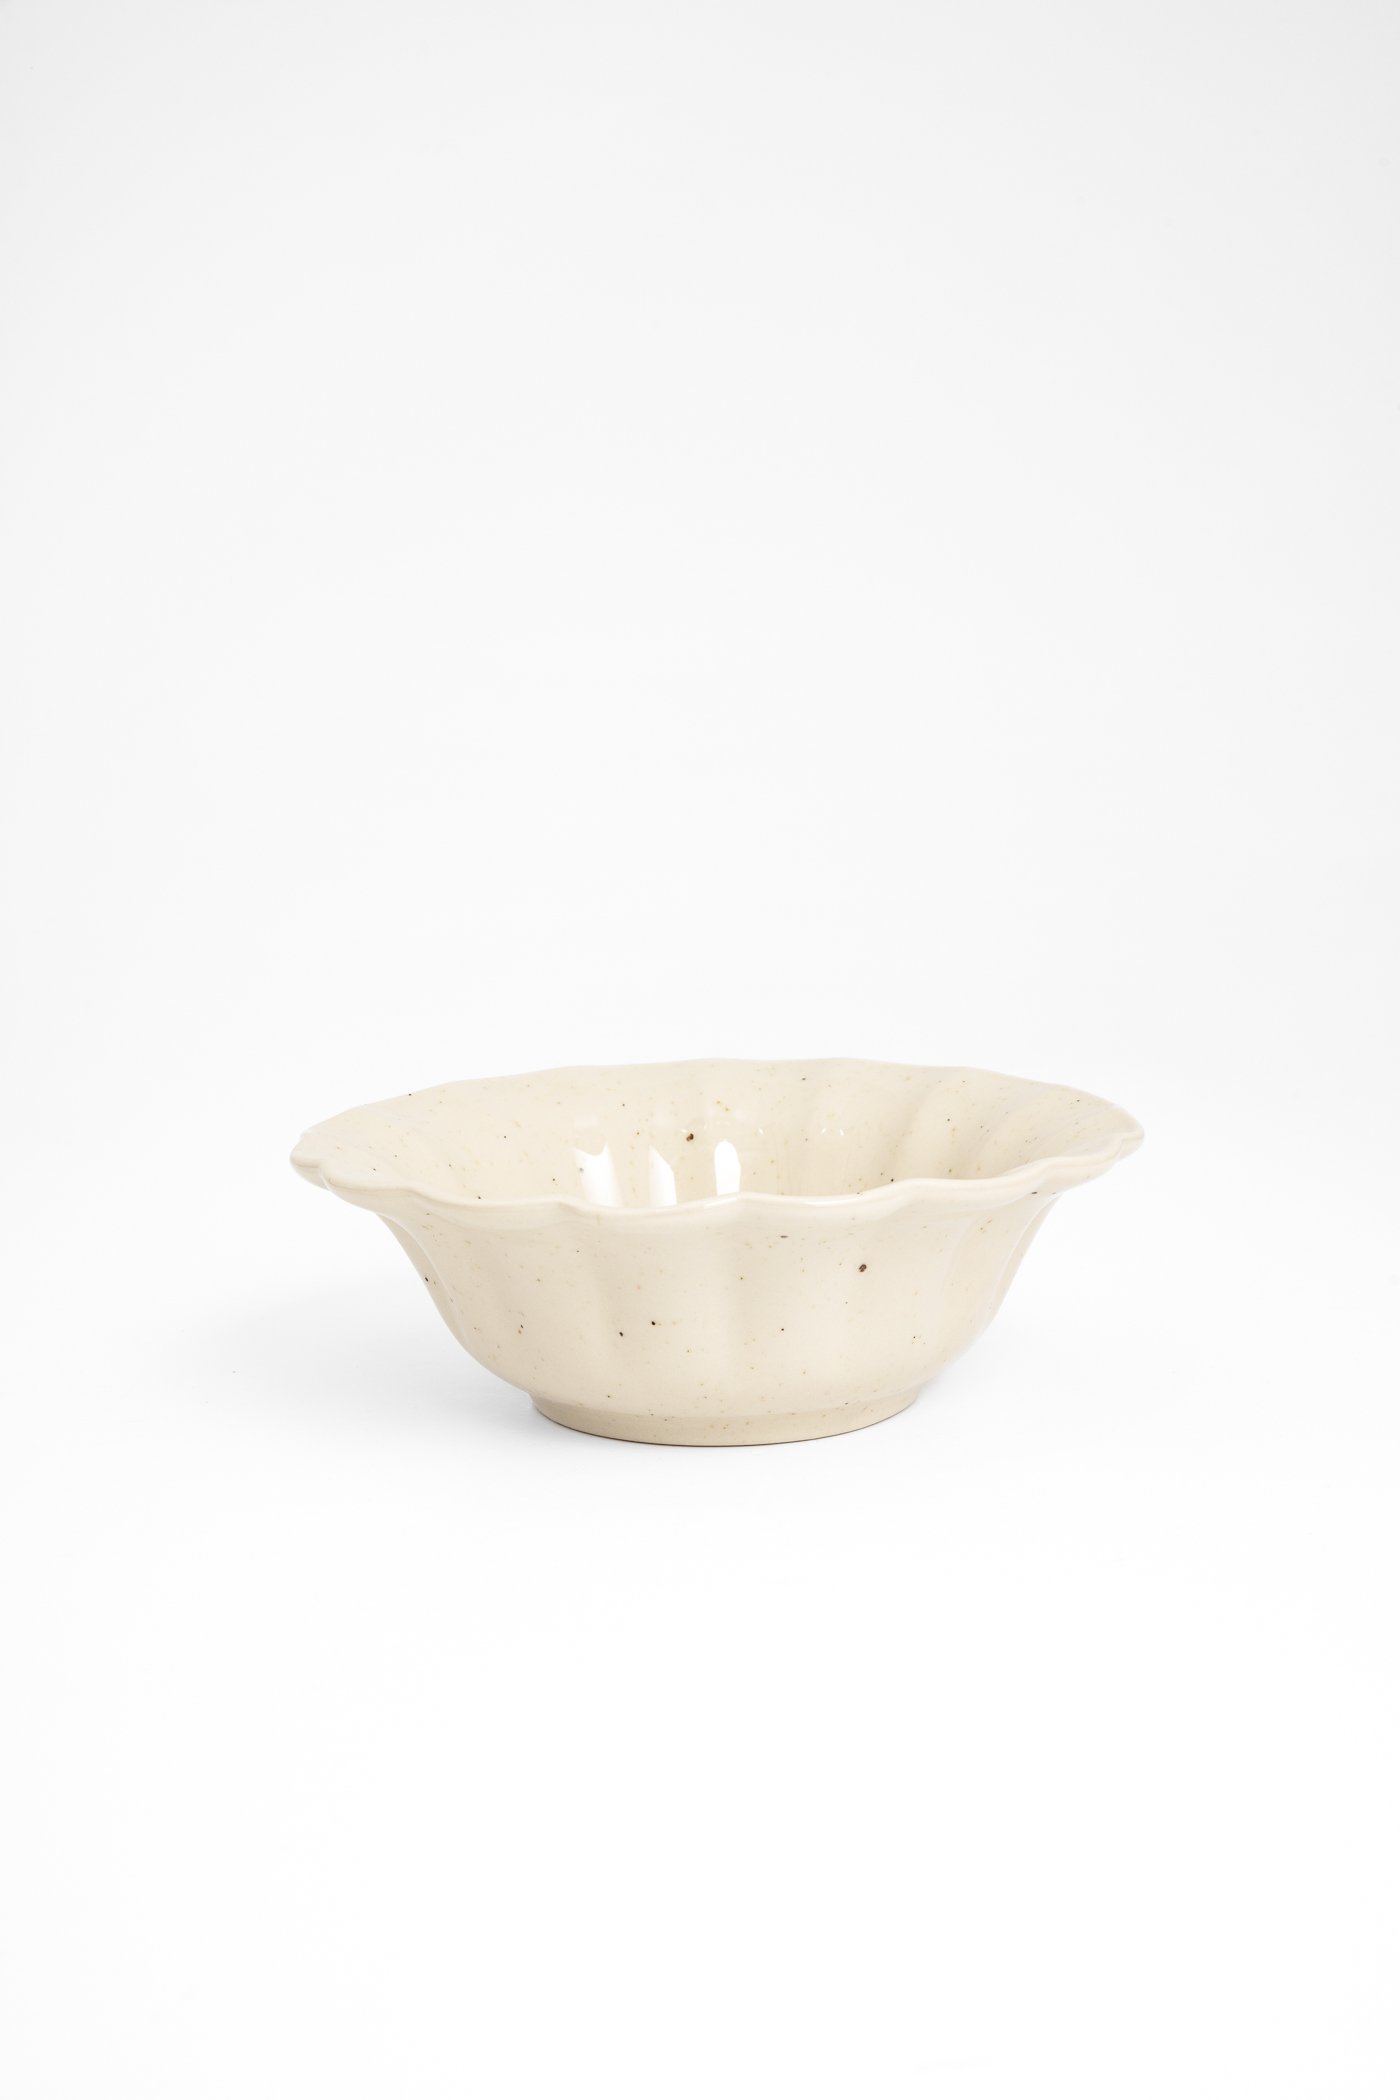 Wavy stoneware bowl